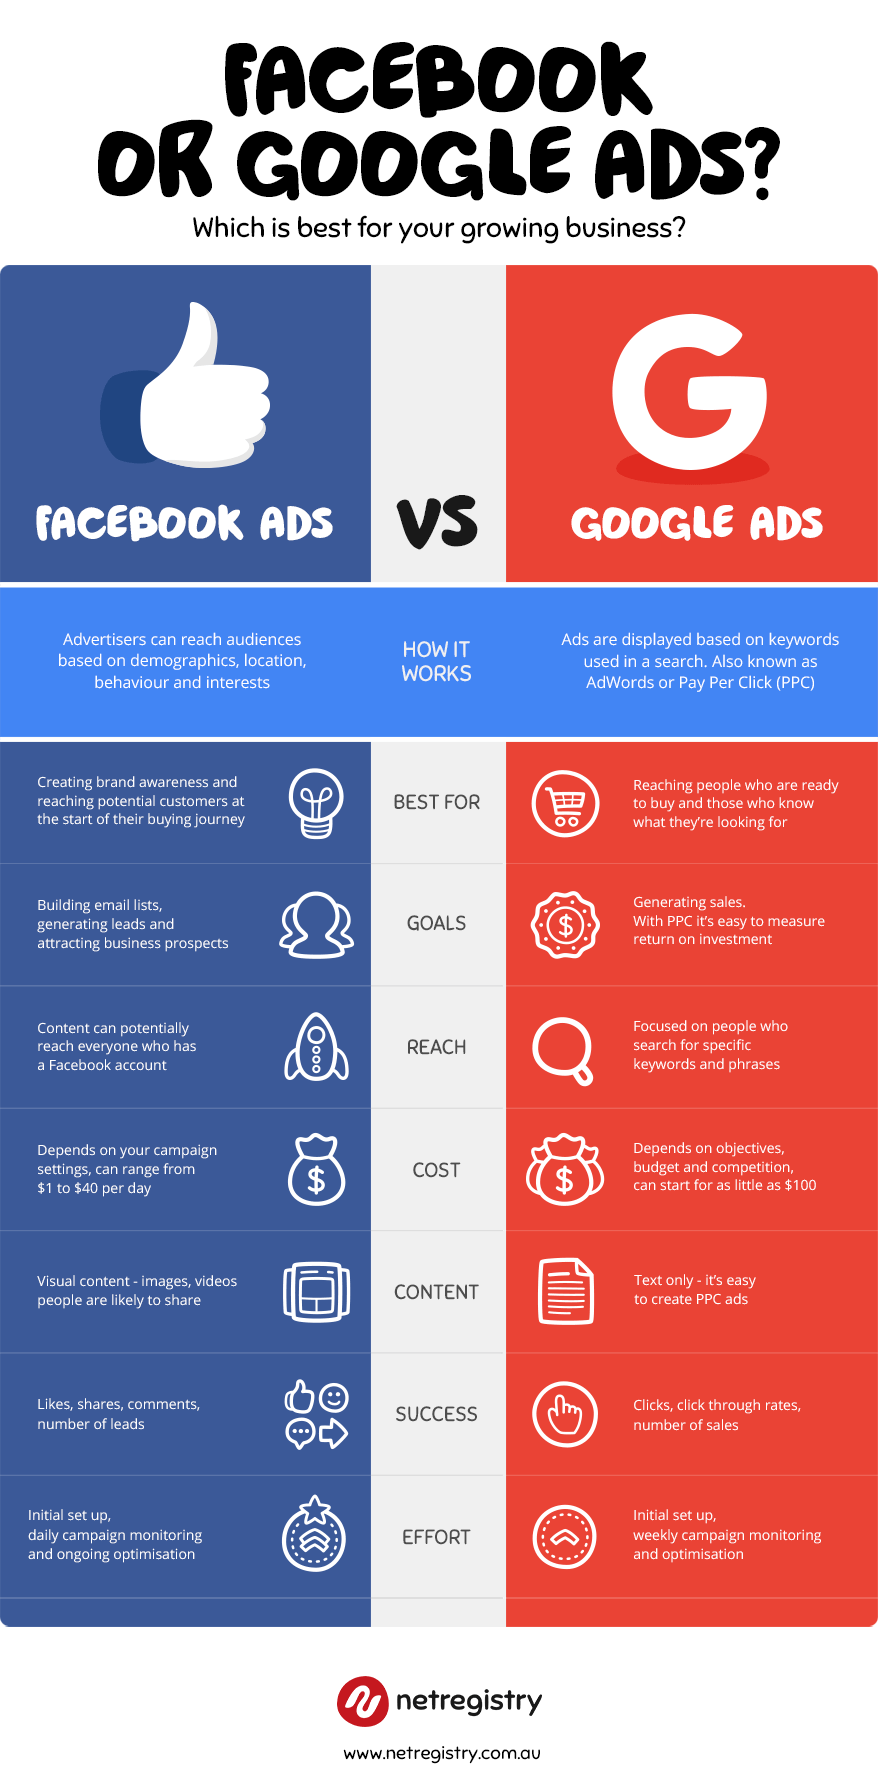 Facebook or Google paid advertising